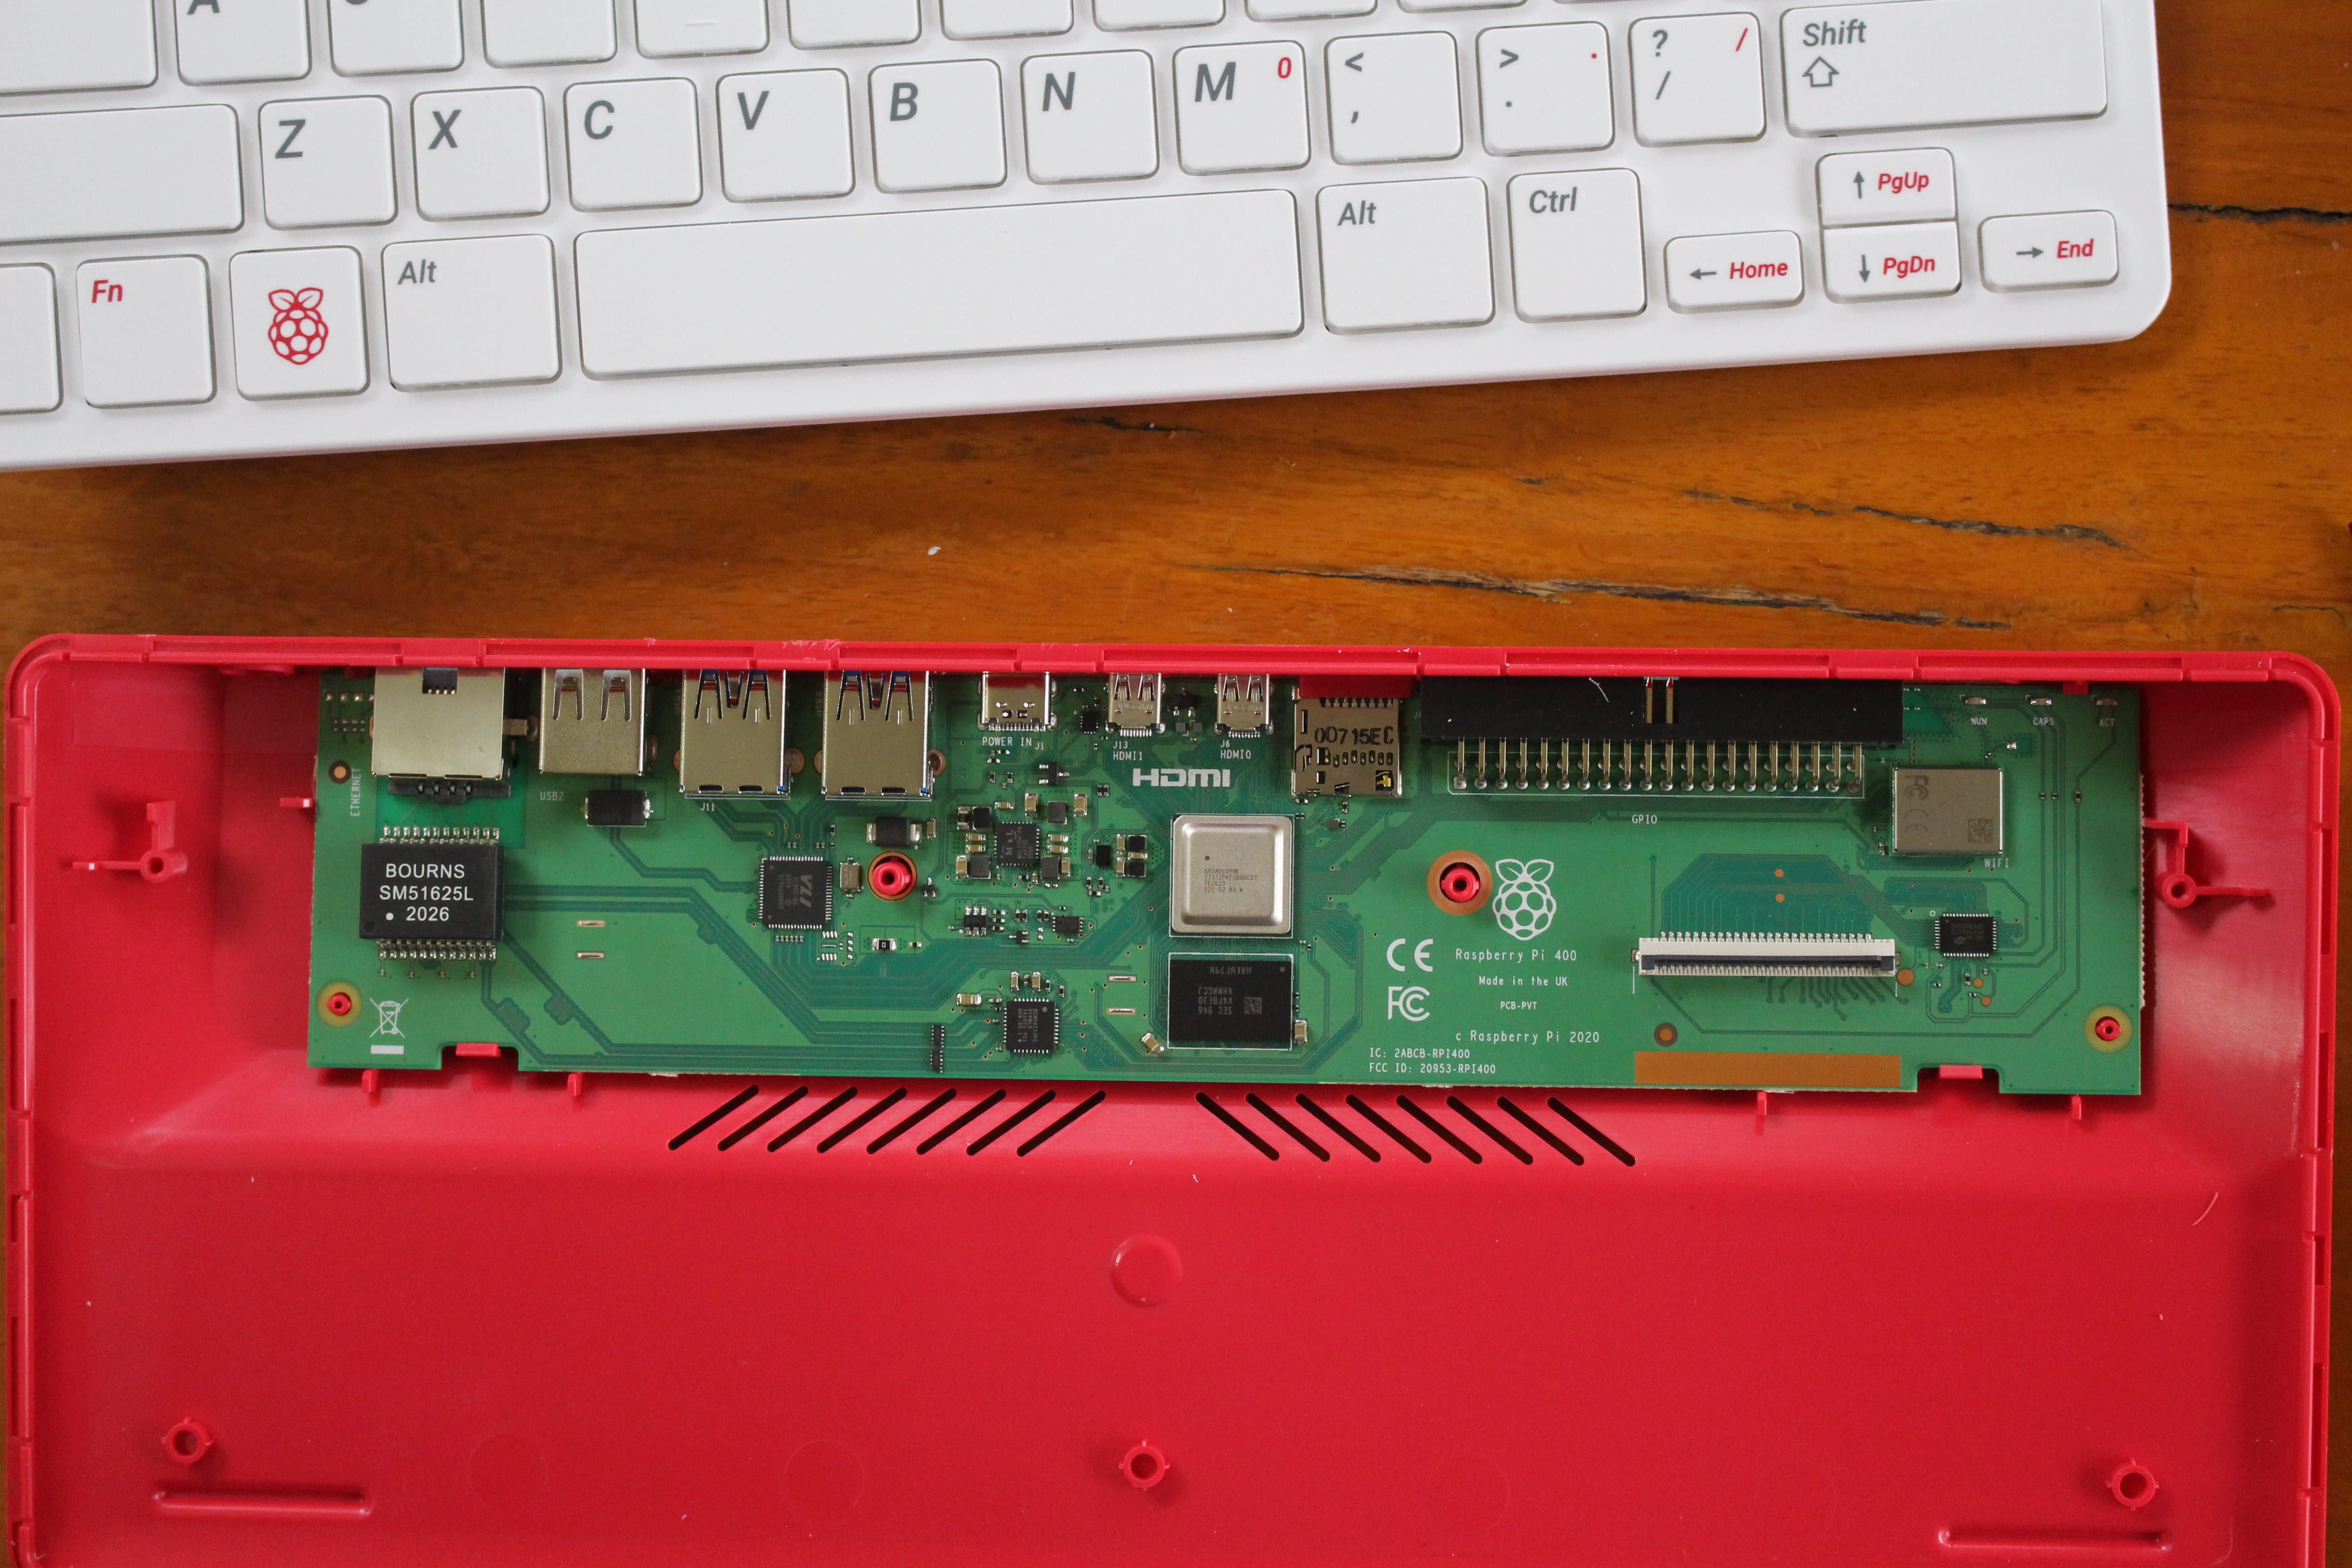 Raspberry Pi 400 Teardown - Heat spreader and motherboard - CNX